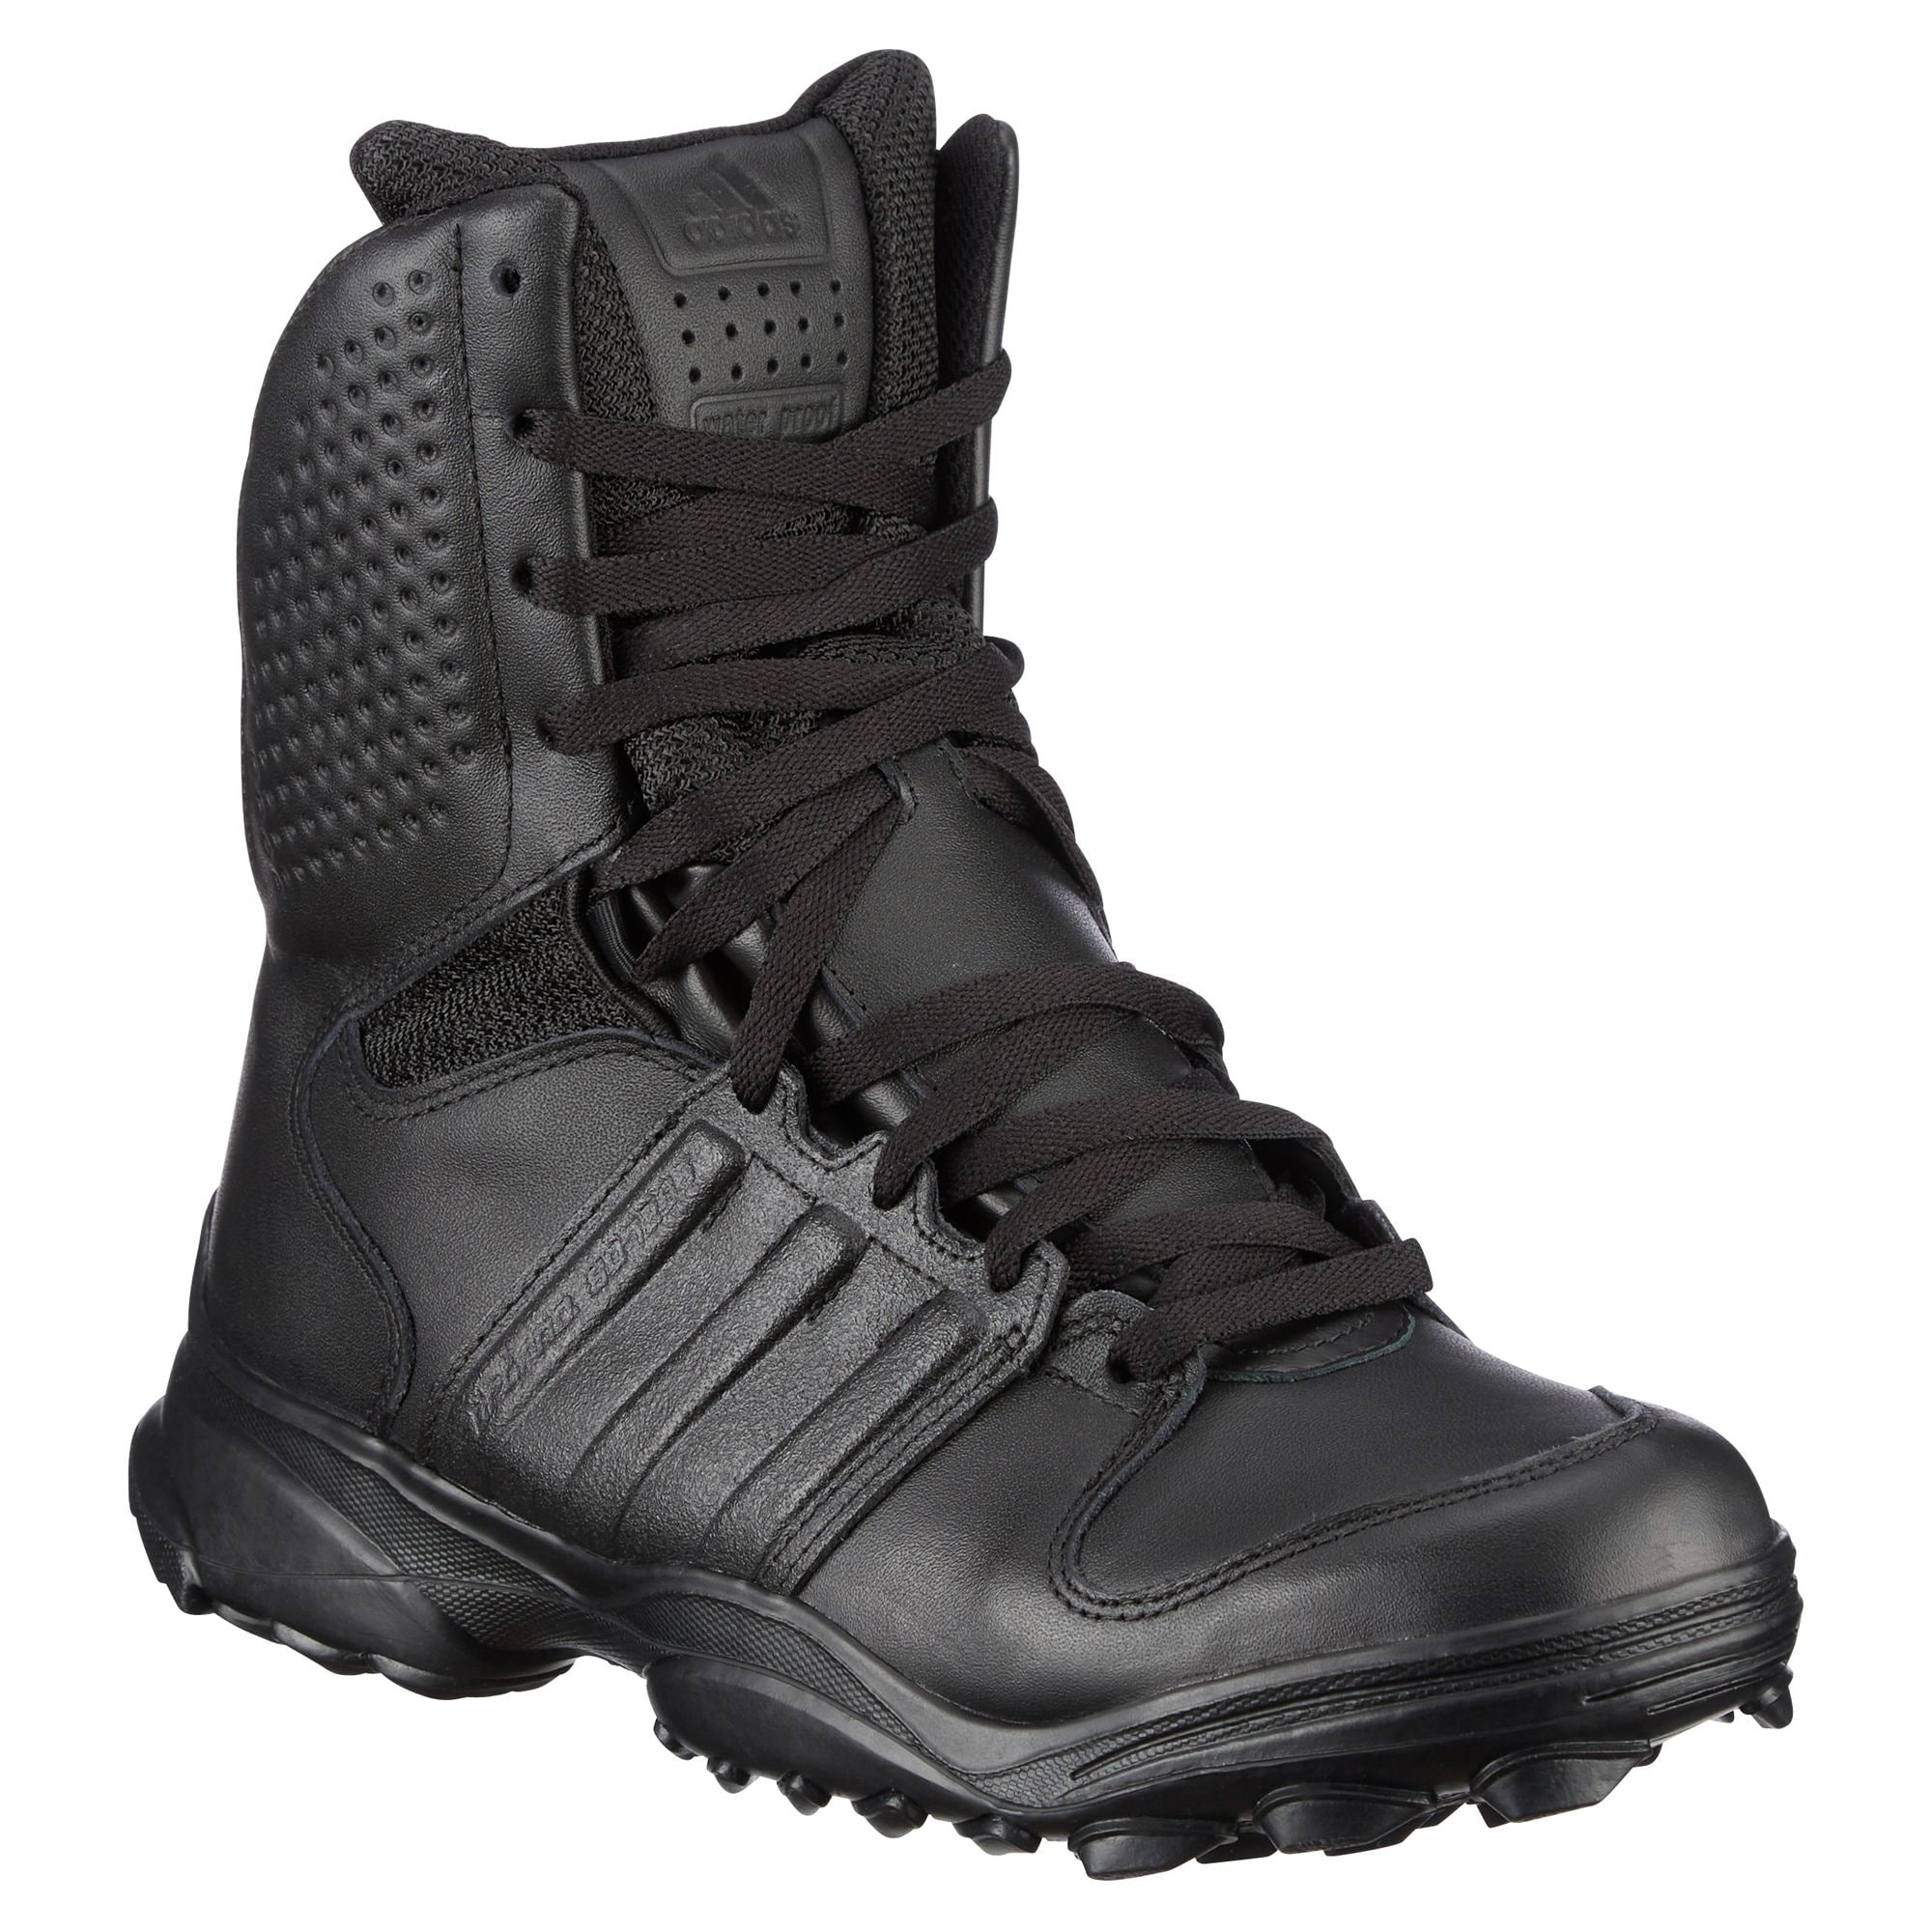 adidas gsg 9.2 high boots